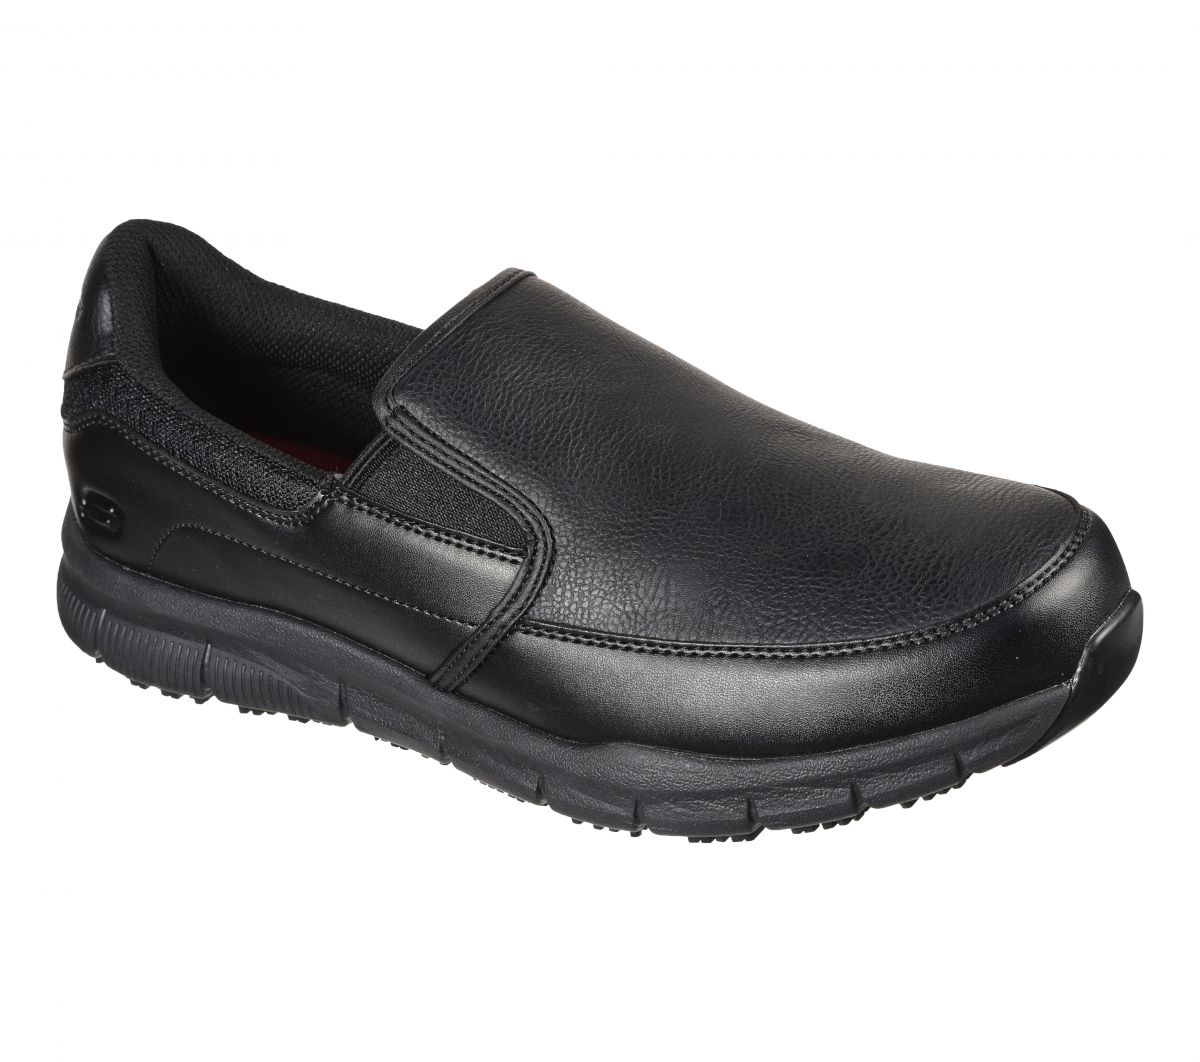 SKECHERS WORK Men's Relaxed Fit Nampa - Groton SR Slip Resistant Work Shoe Black - 77157-BLK